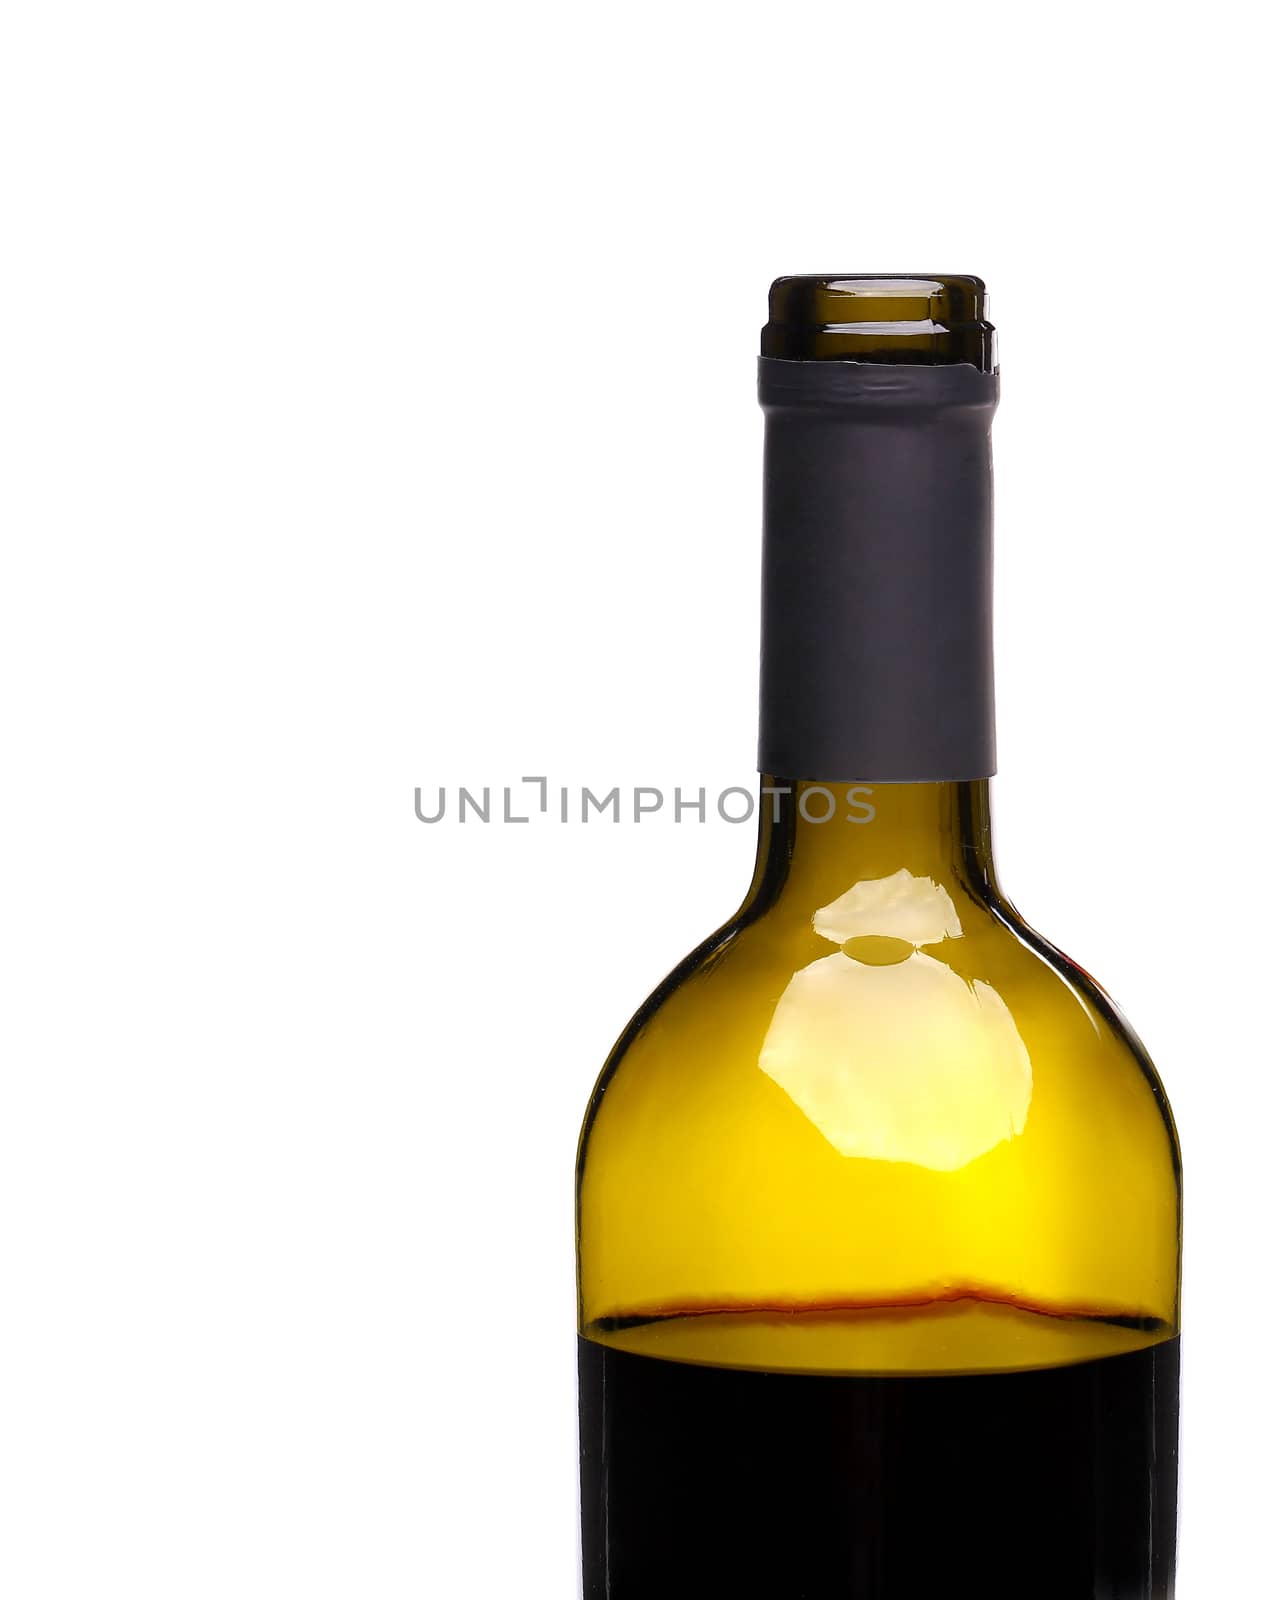 Open bottle of red wine on white bavkground